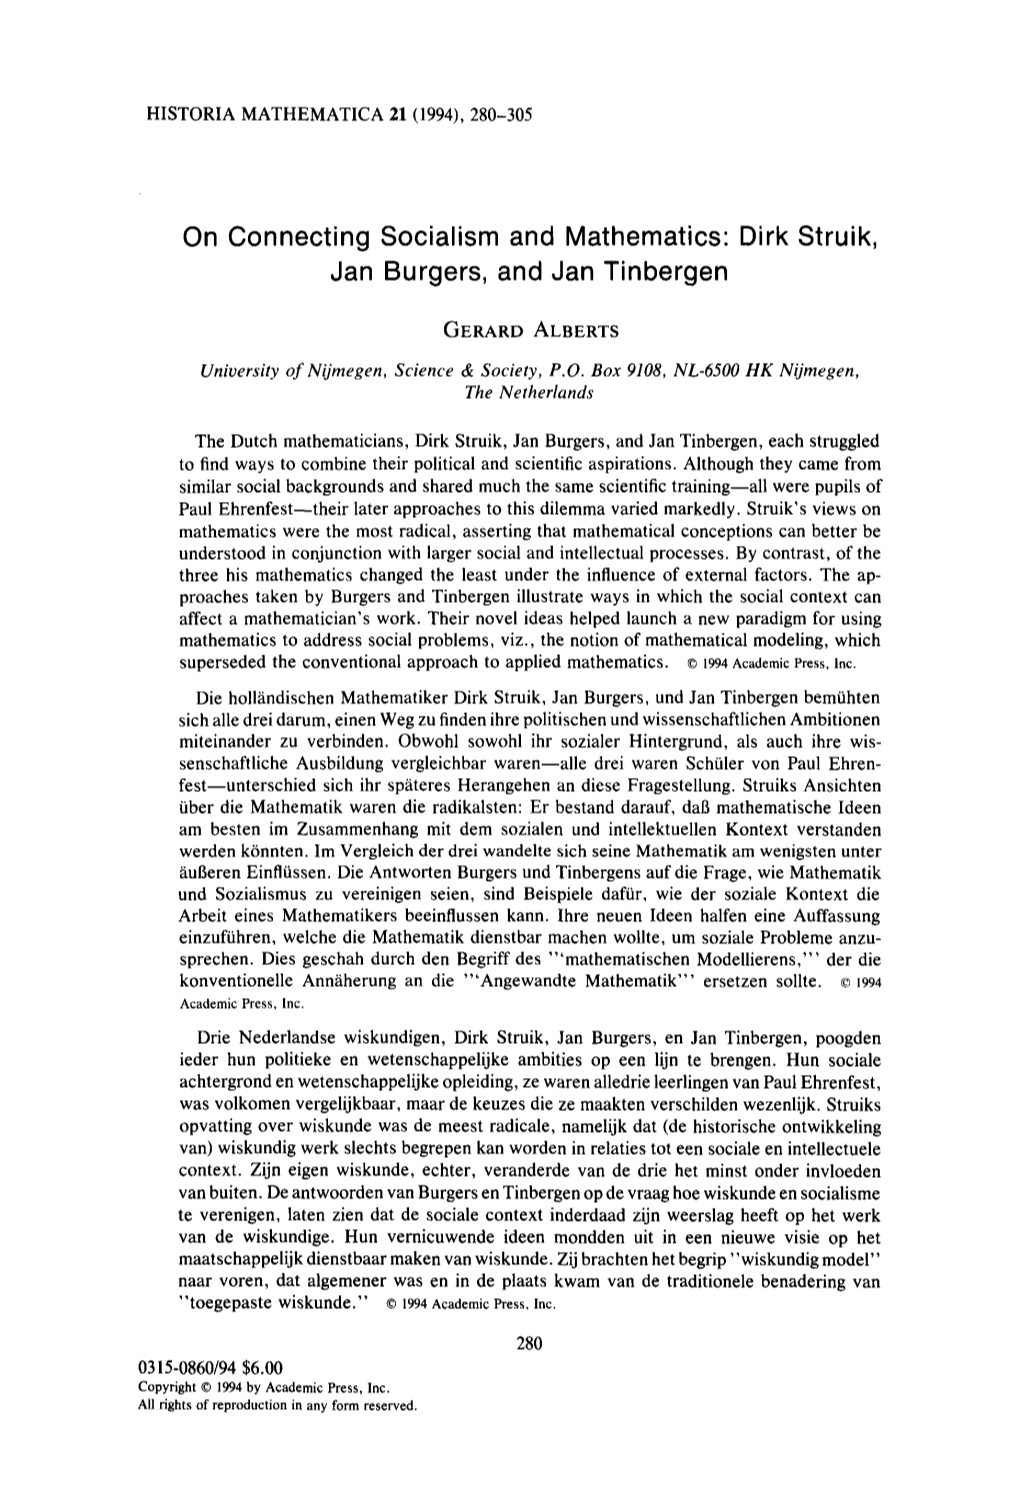 On Connecting Socialism and Mathematics: Dirk Struik, Jan Burgers, and Jan Tinbergen